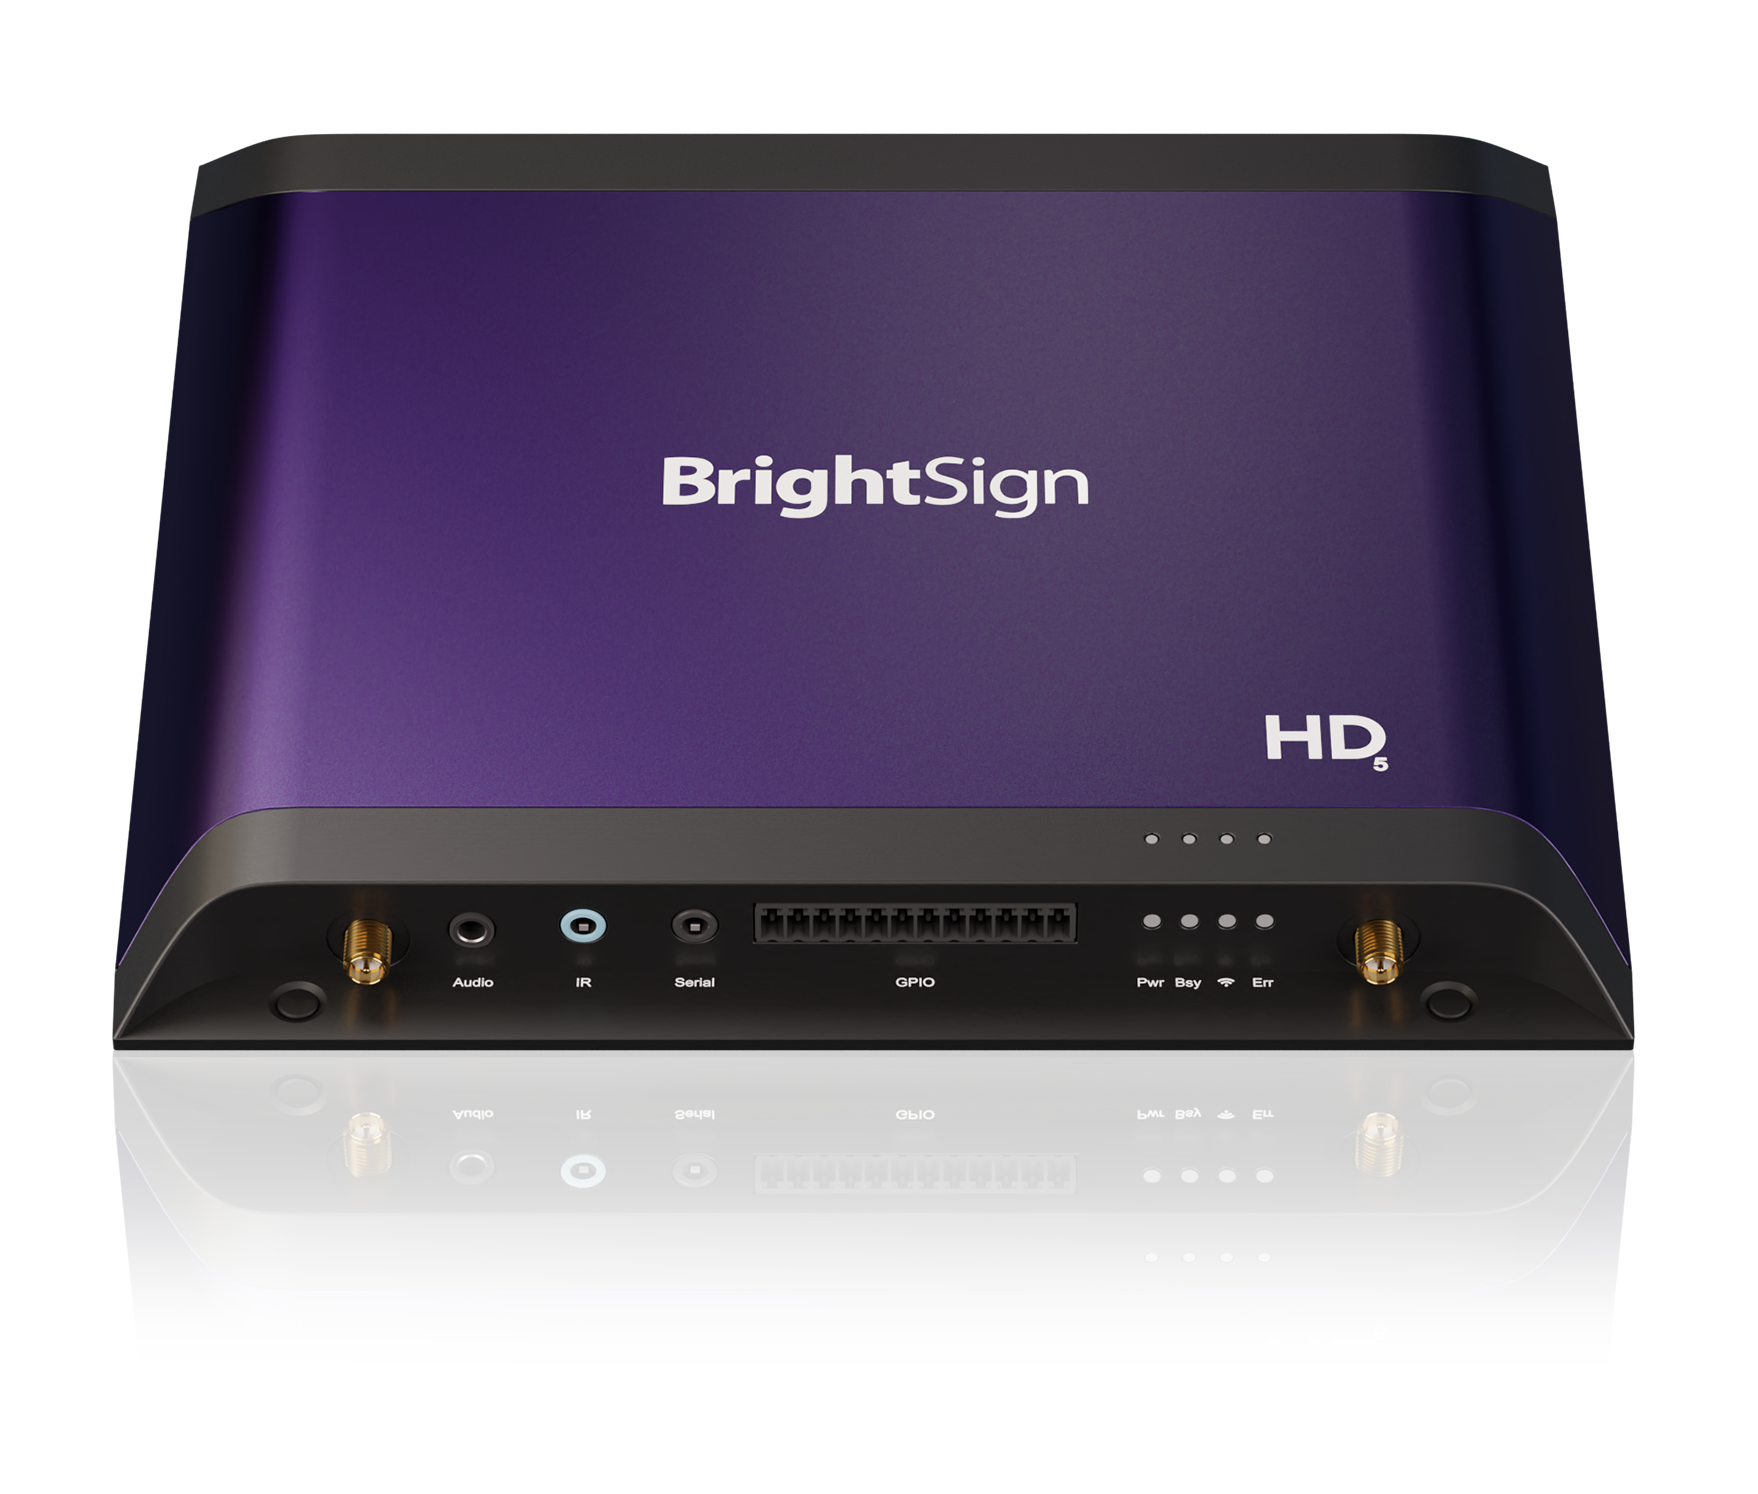 Productafbeelding van BrightSign HD5 digital signage spelers uit de BrightSign serie 5